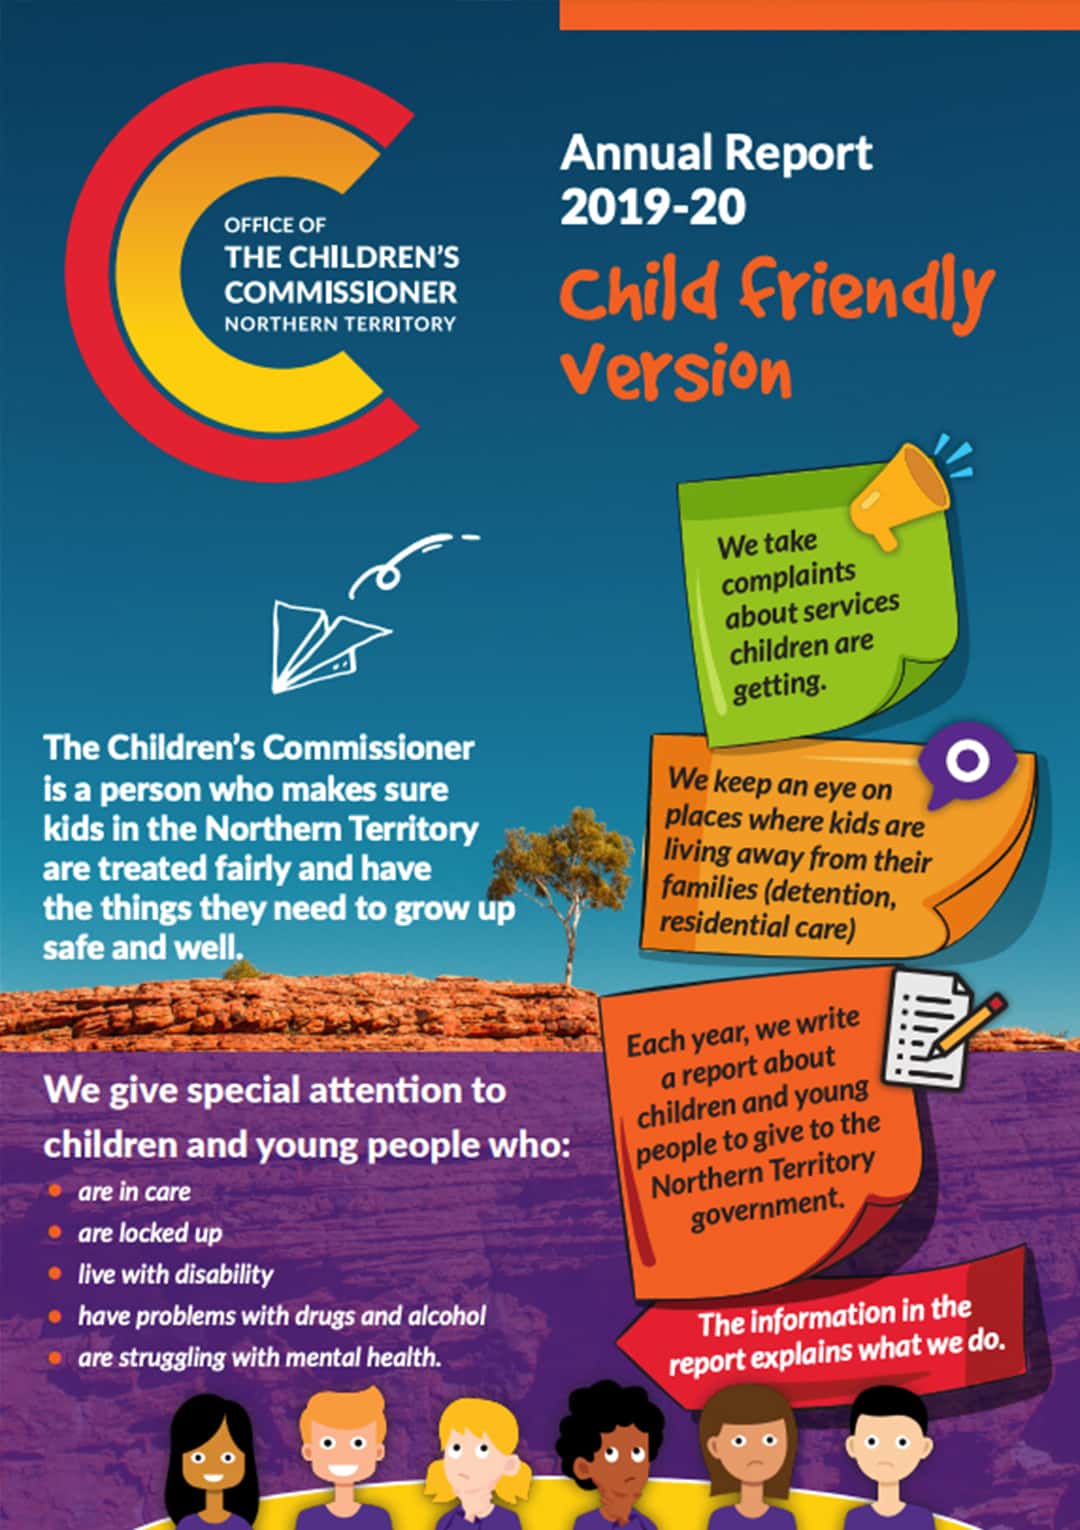 Annual Report 2019-2020 - Child friendly